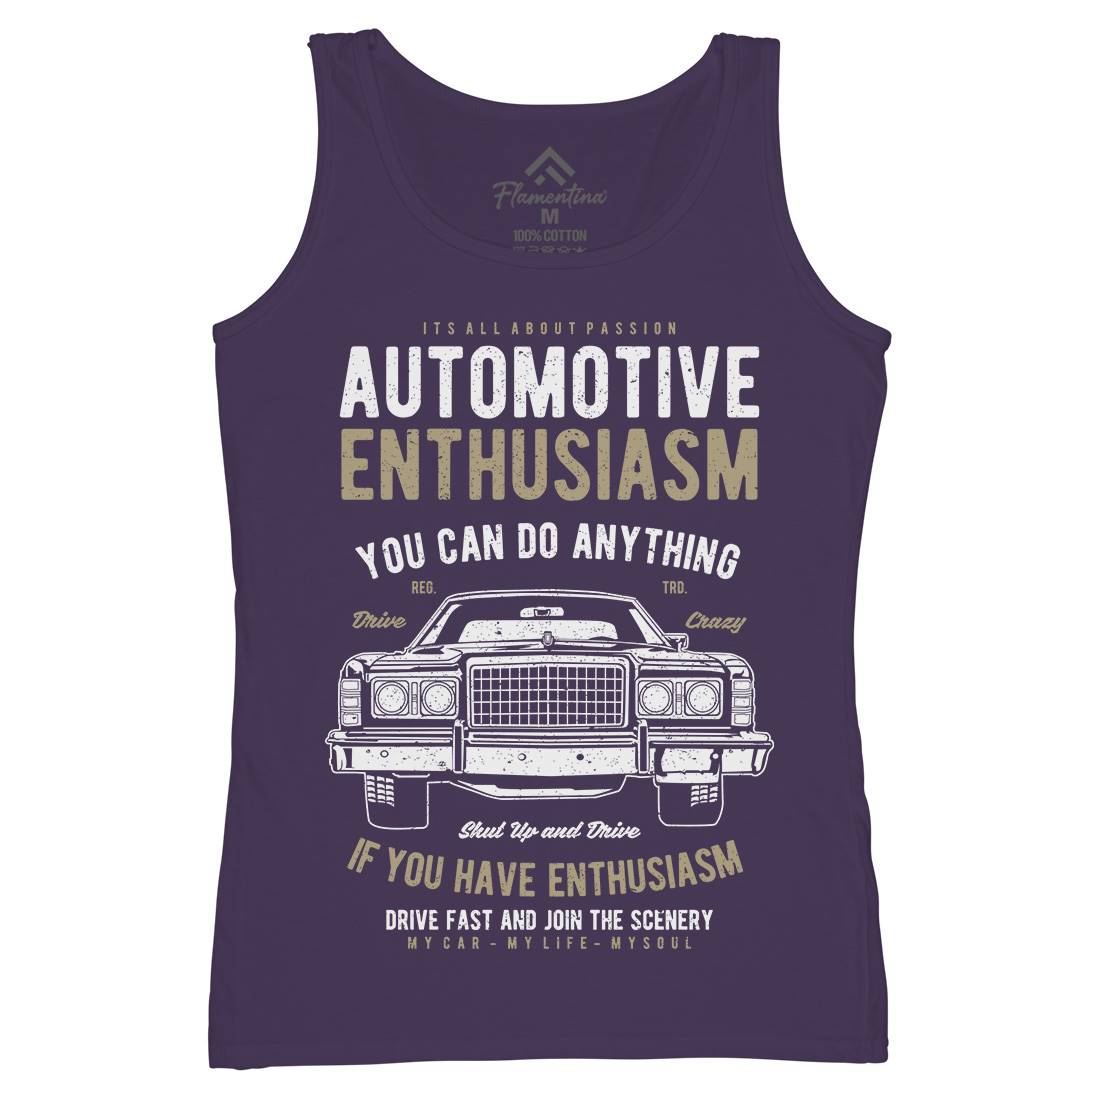 Automotive Enthusiasm Womens Organic Tank Top Vest Cars A614